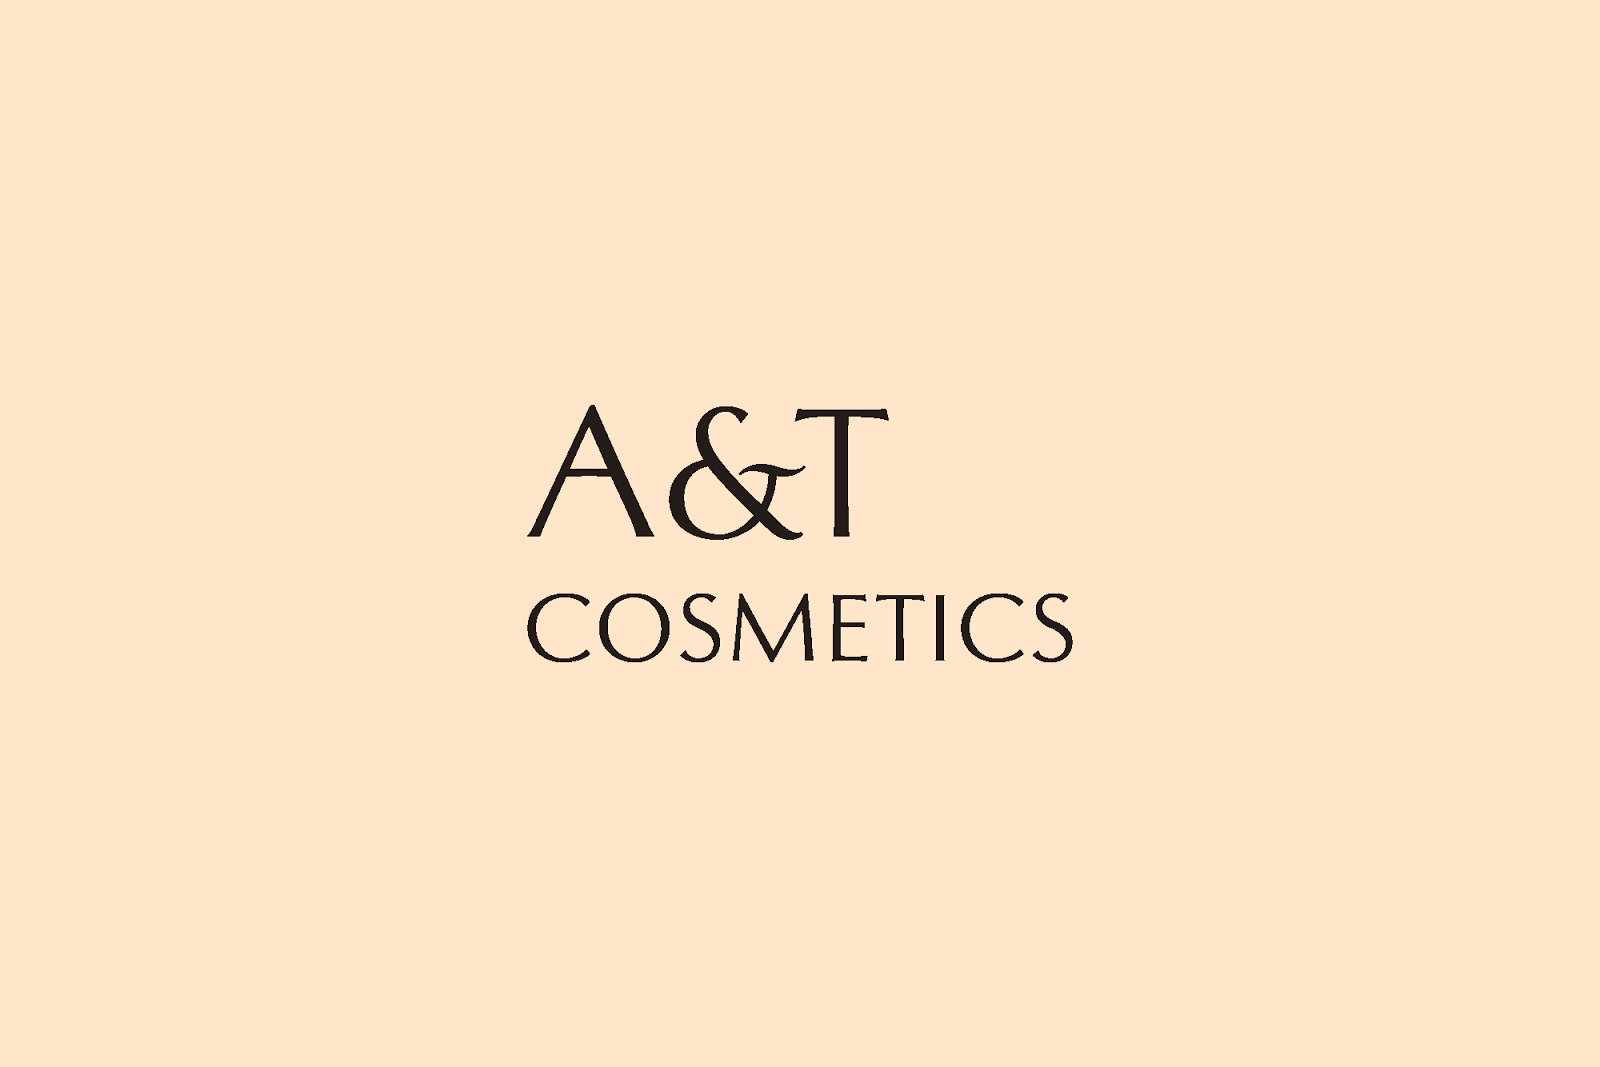 A&T Cosmetics